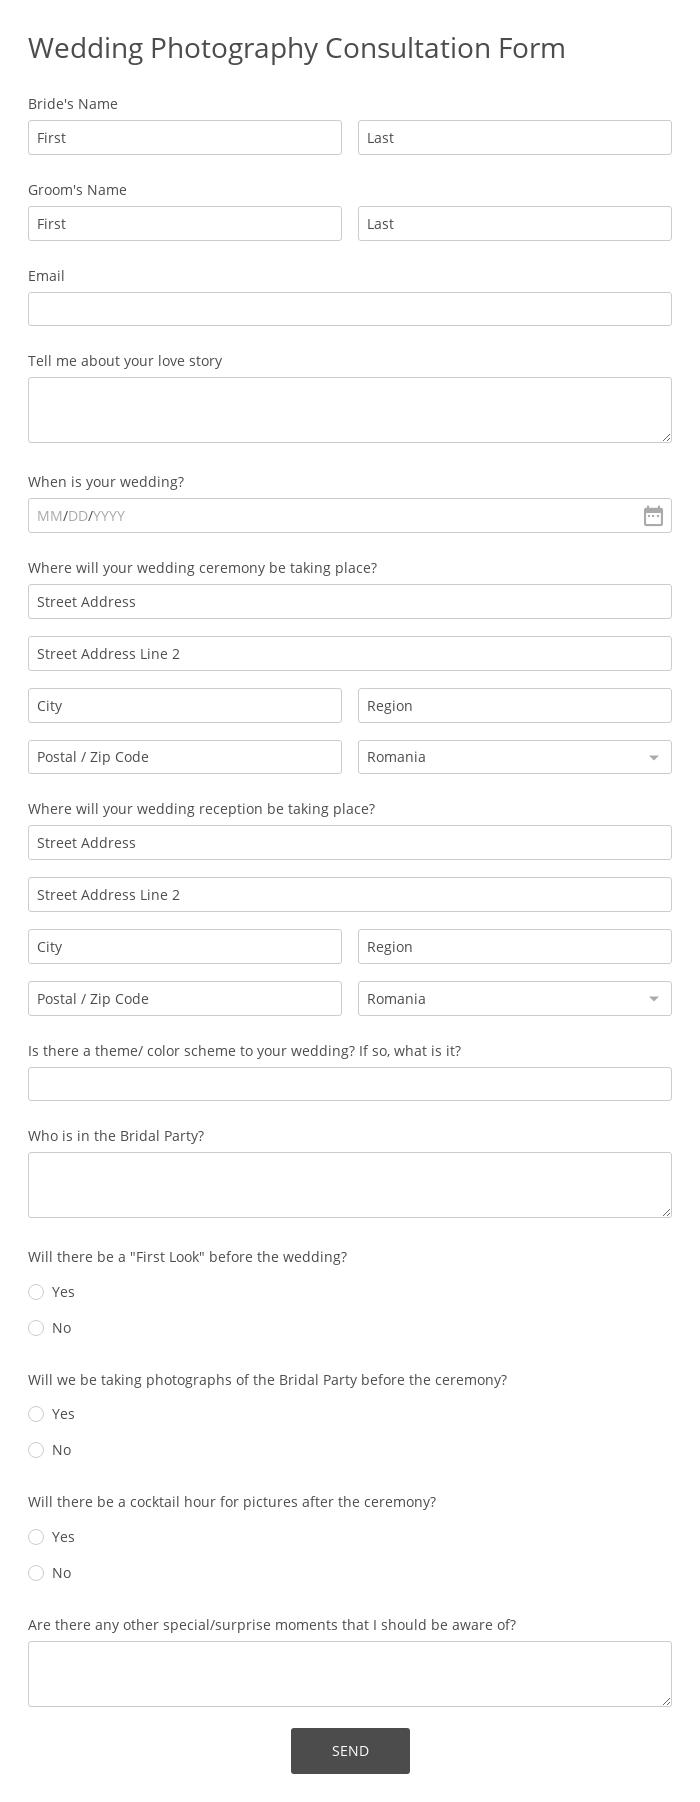 Wedding Photography Consultation Form